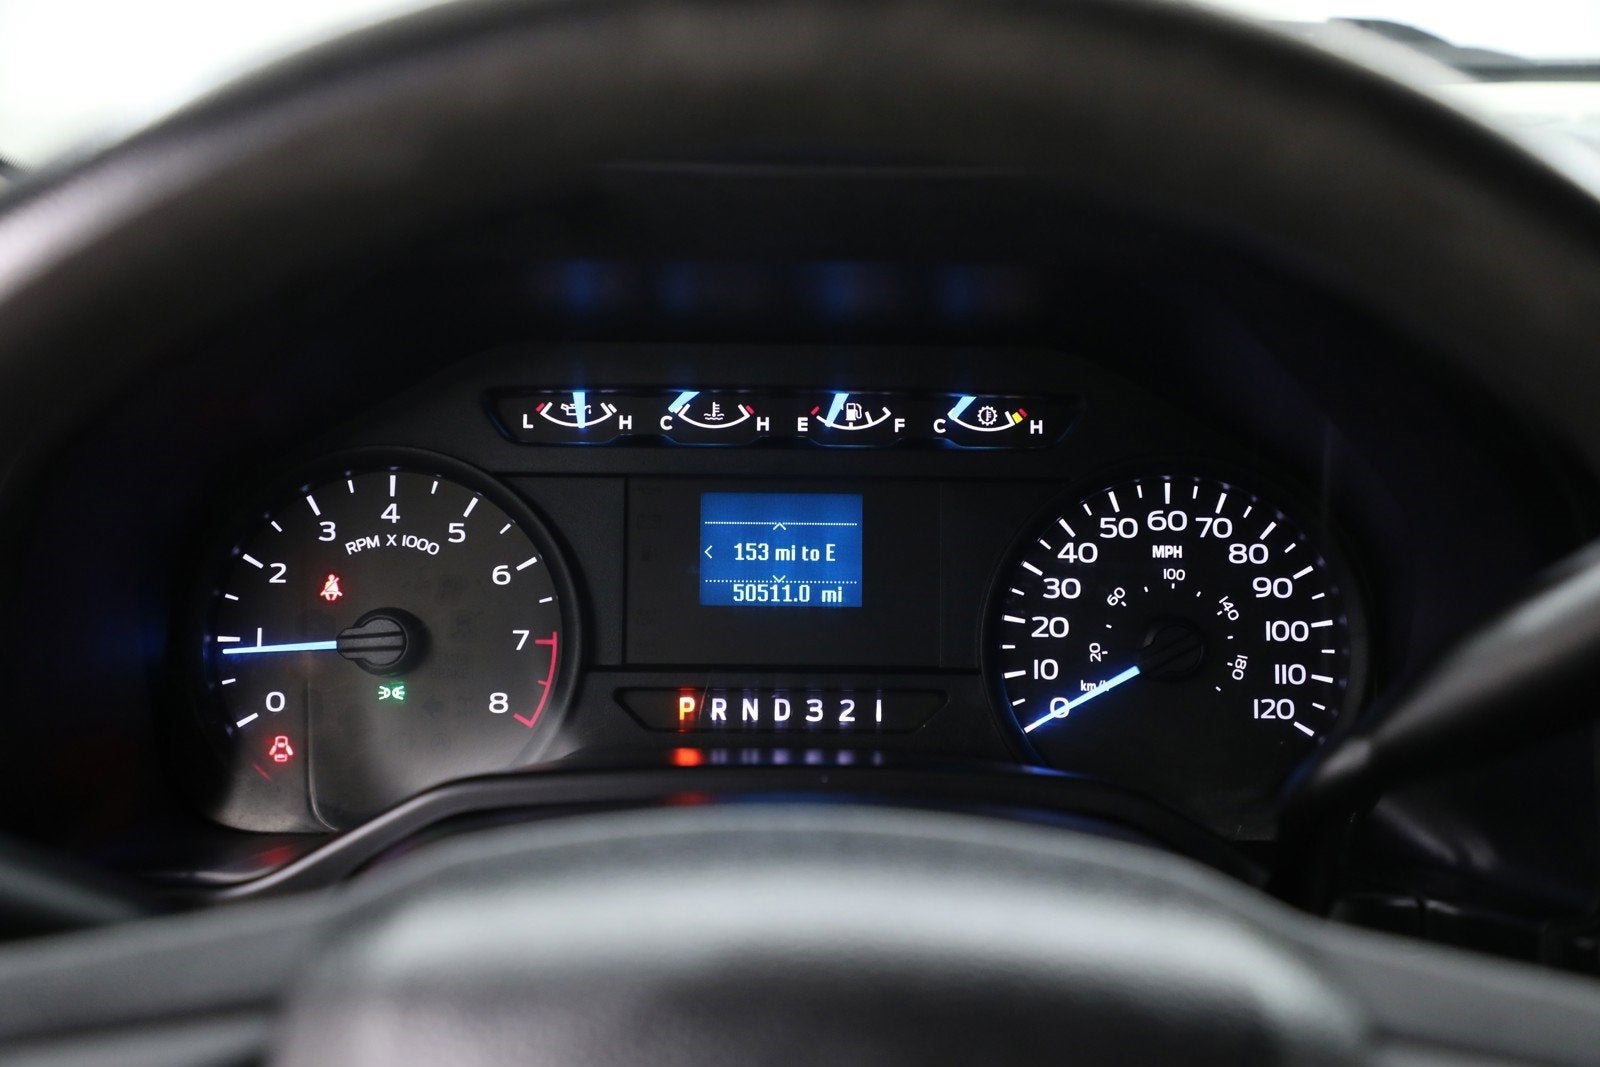 2016 Ford F-150 Regular Cab XL 4WD Cruise Control Adjusting Steering Wheel Clean Carfax Low Mileage